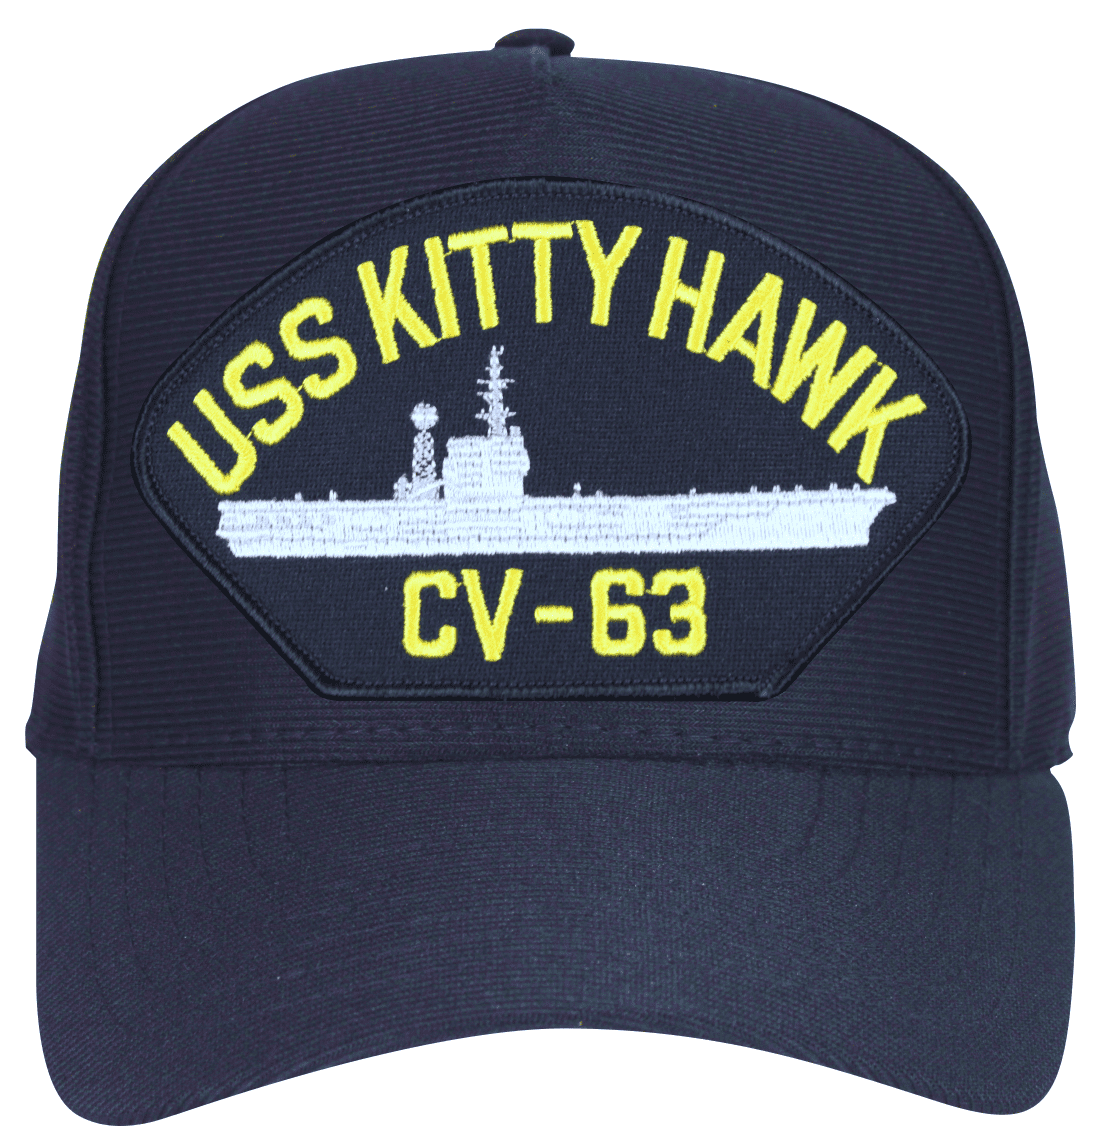 USS Kitty Hawk CV-63 Embroidered Baseball Cap Black